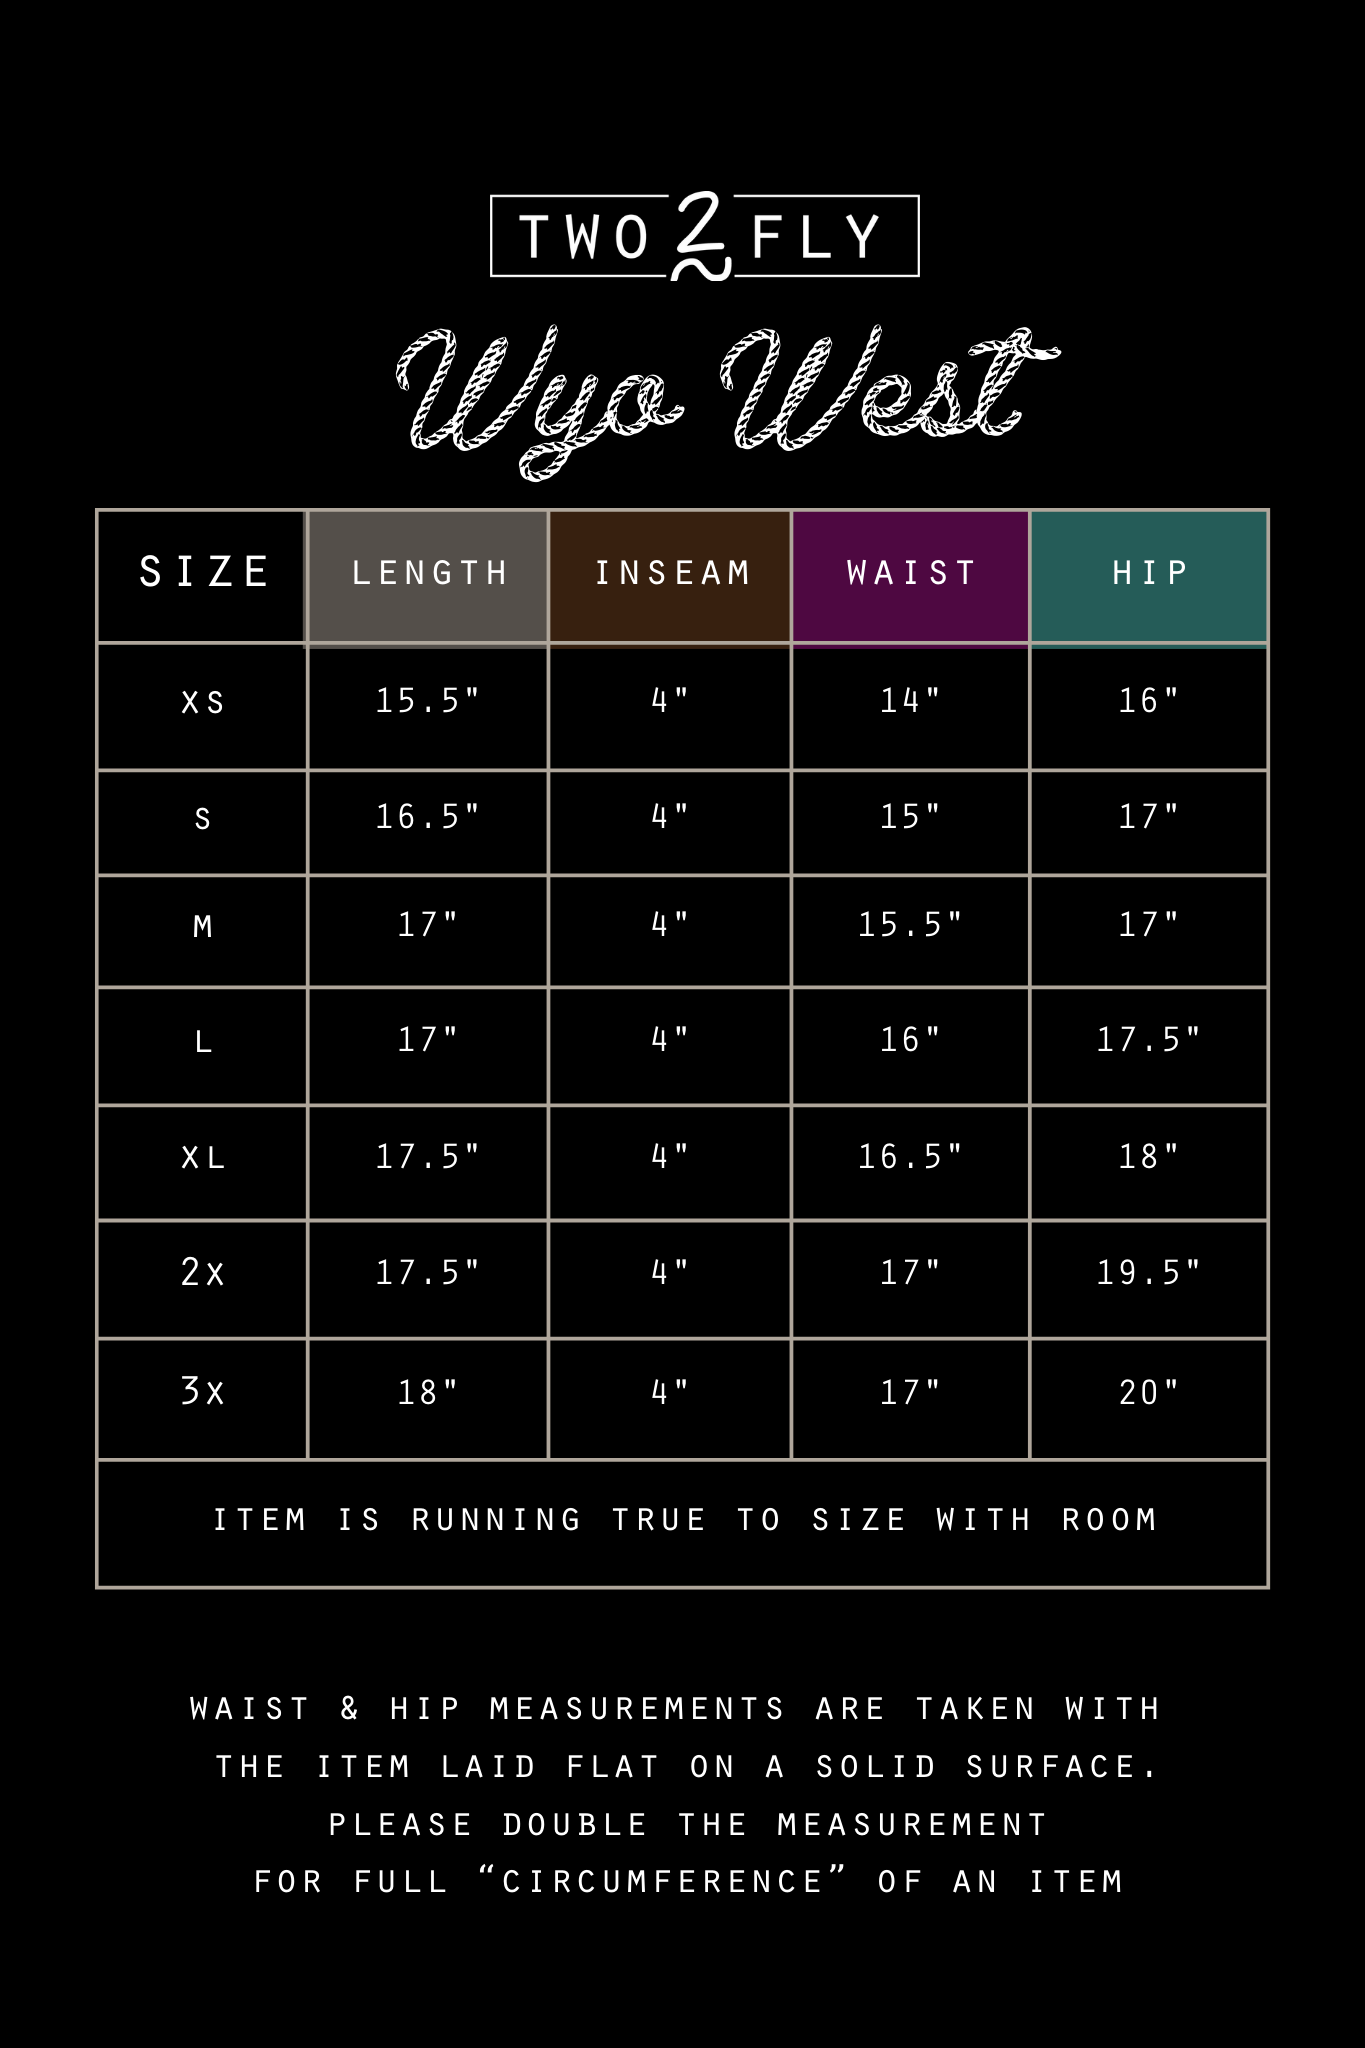 the Wyo |West| shorts